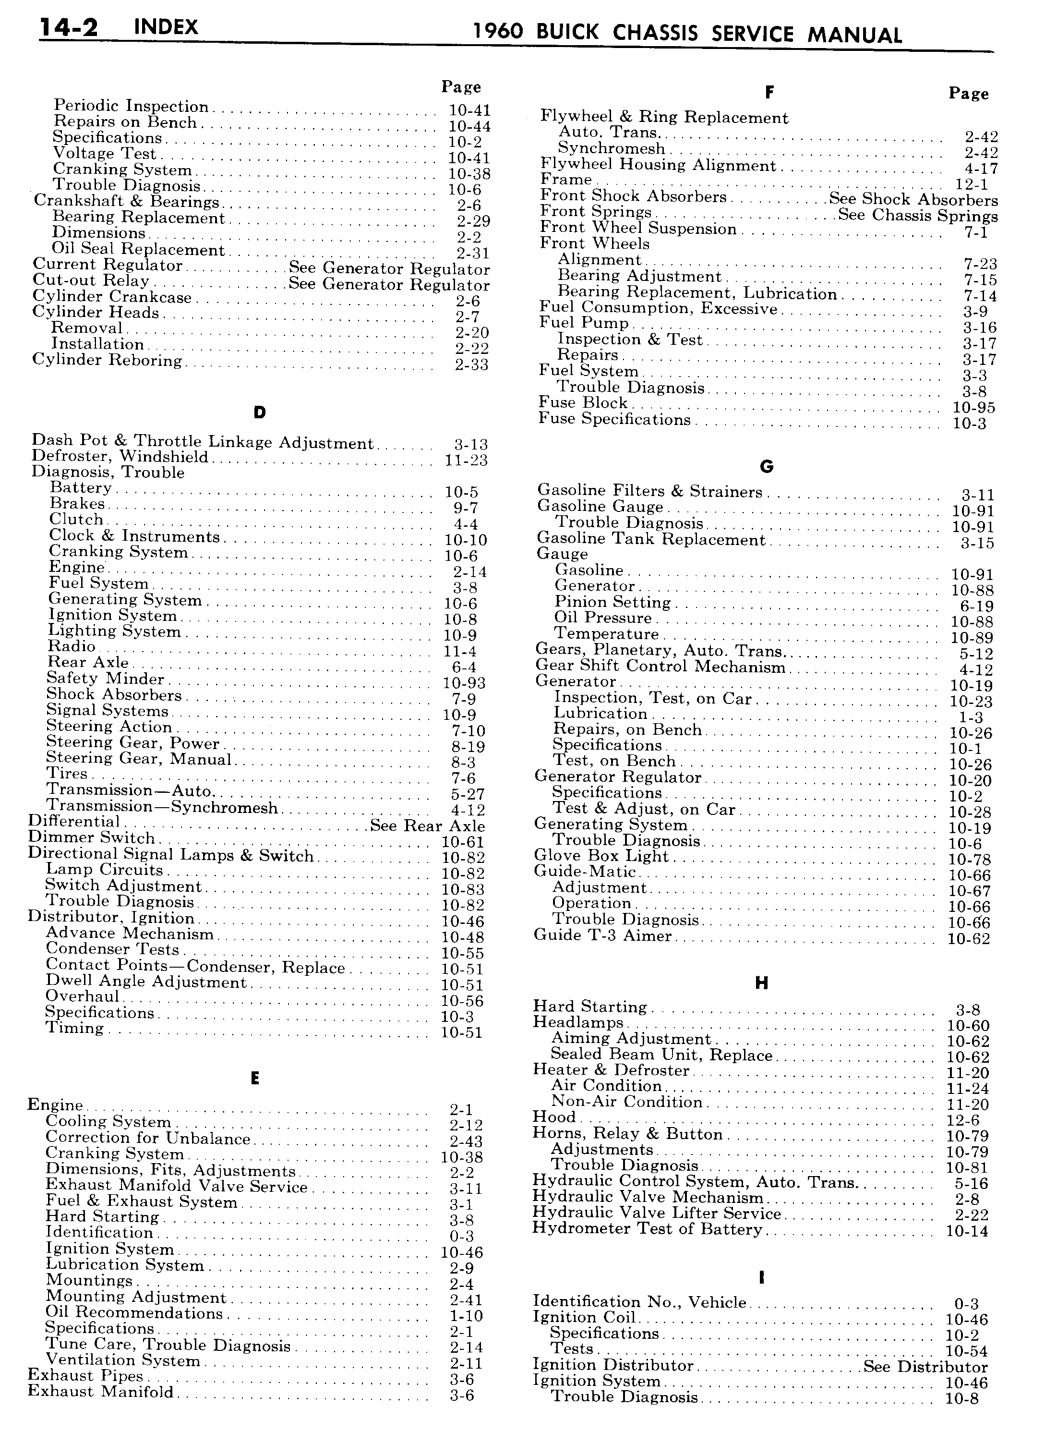 n_14 1960 Buick Shop Manual - Index-002-002.jpg